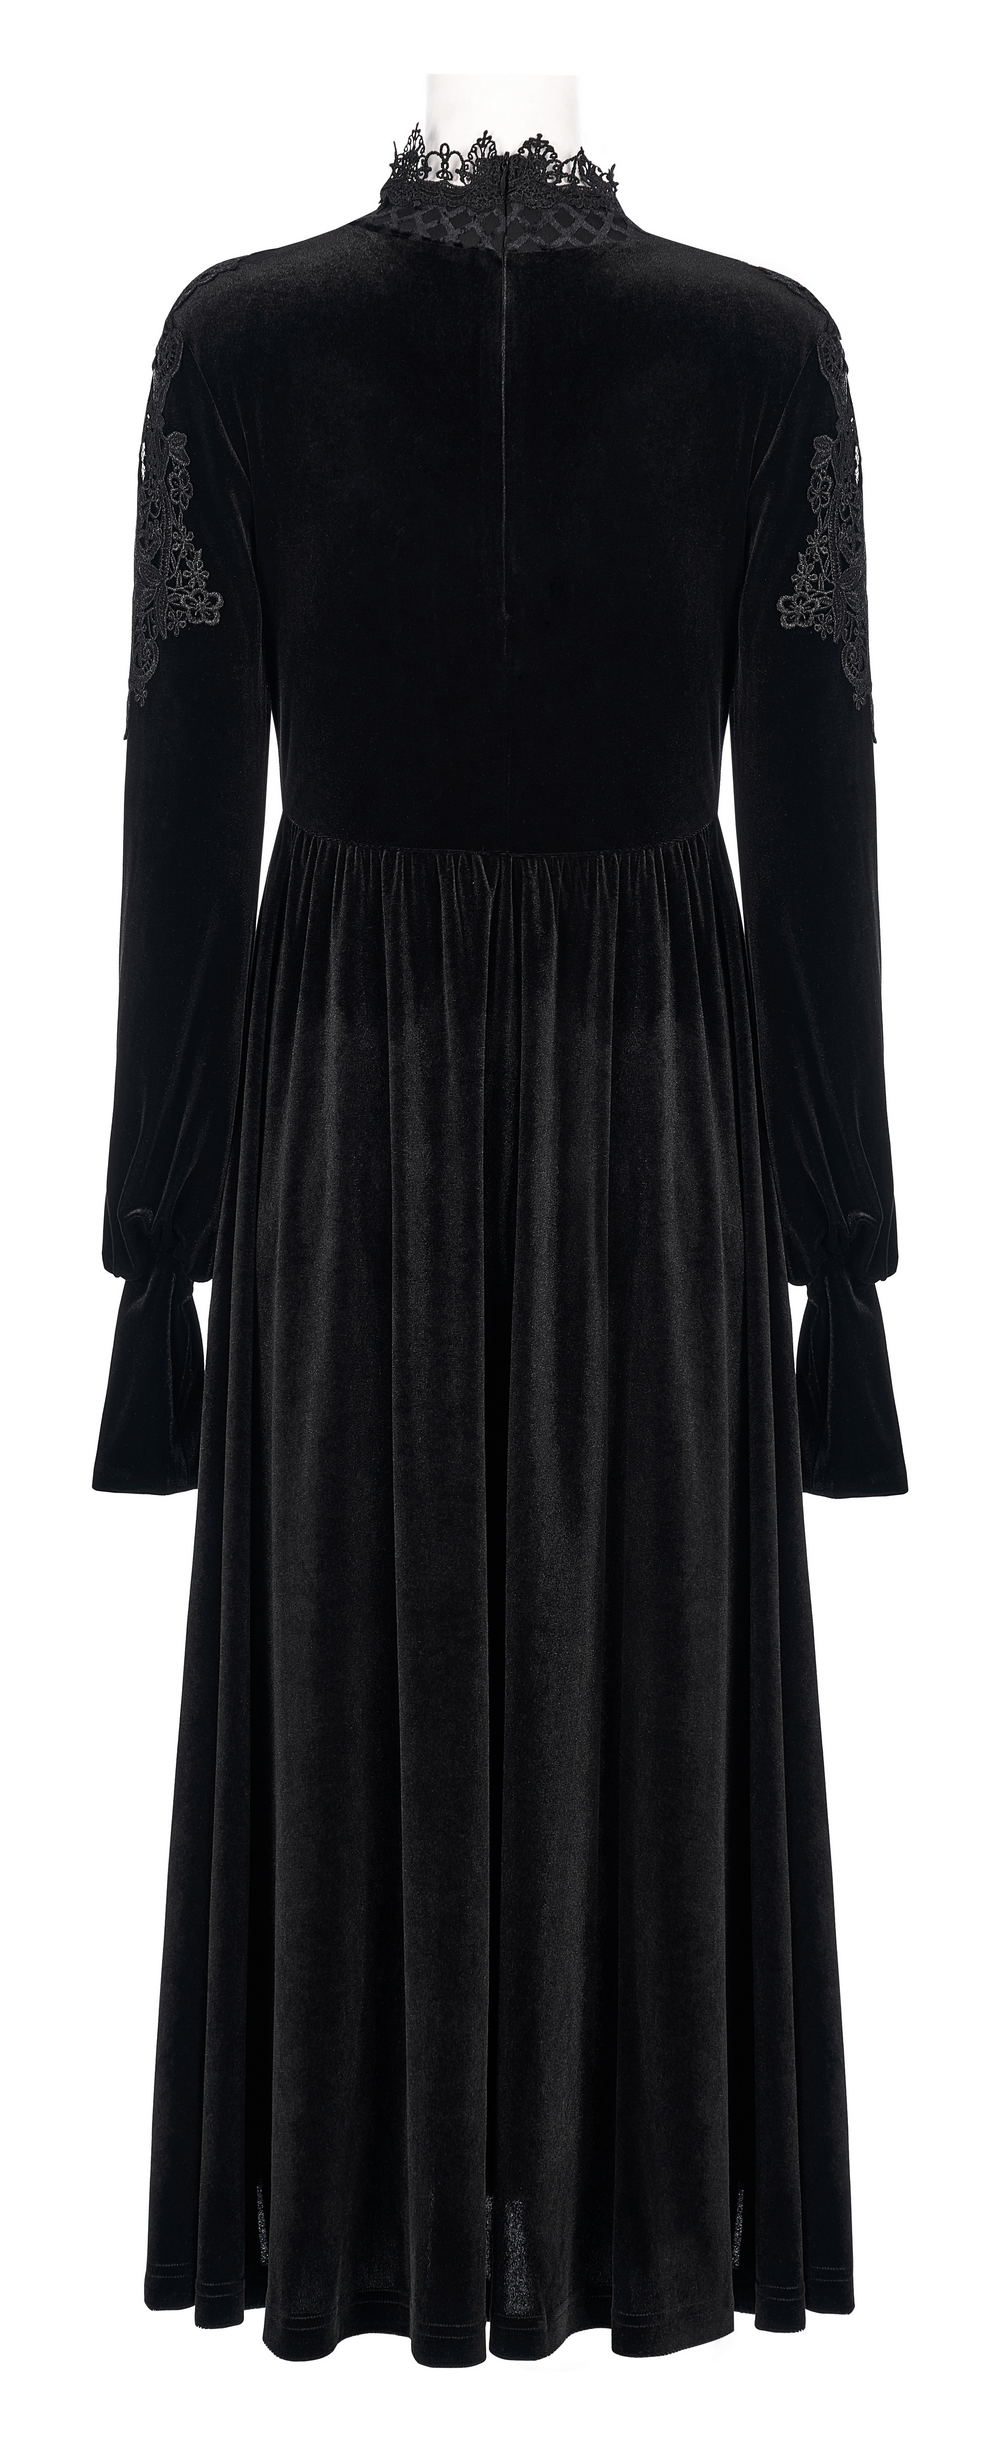 Elegant Lace-Collar Velvet Gothic Dress With Zipper in the Back - HARD'N'HEAVY